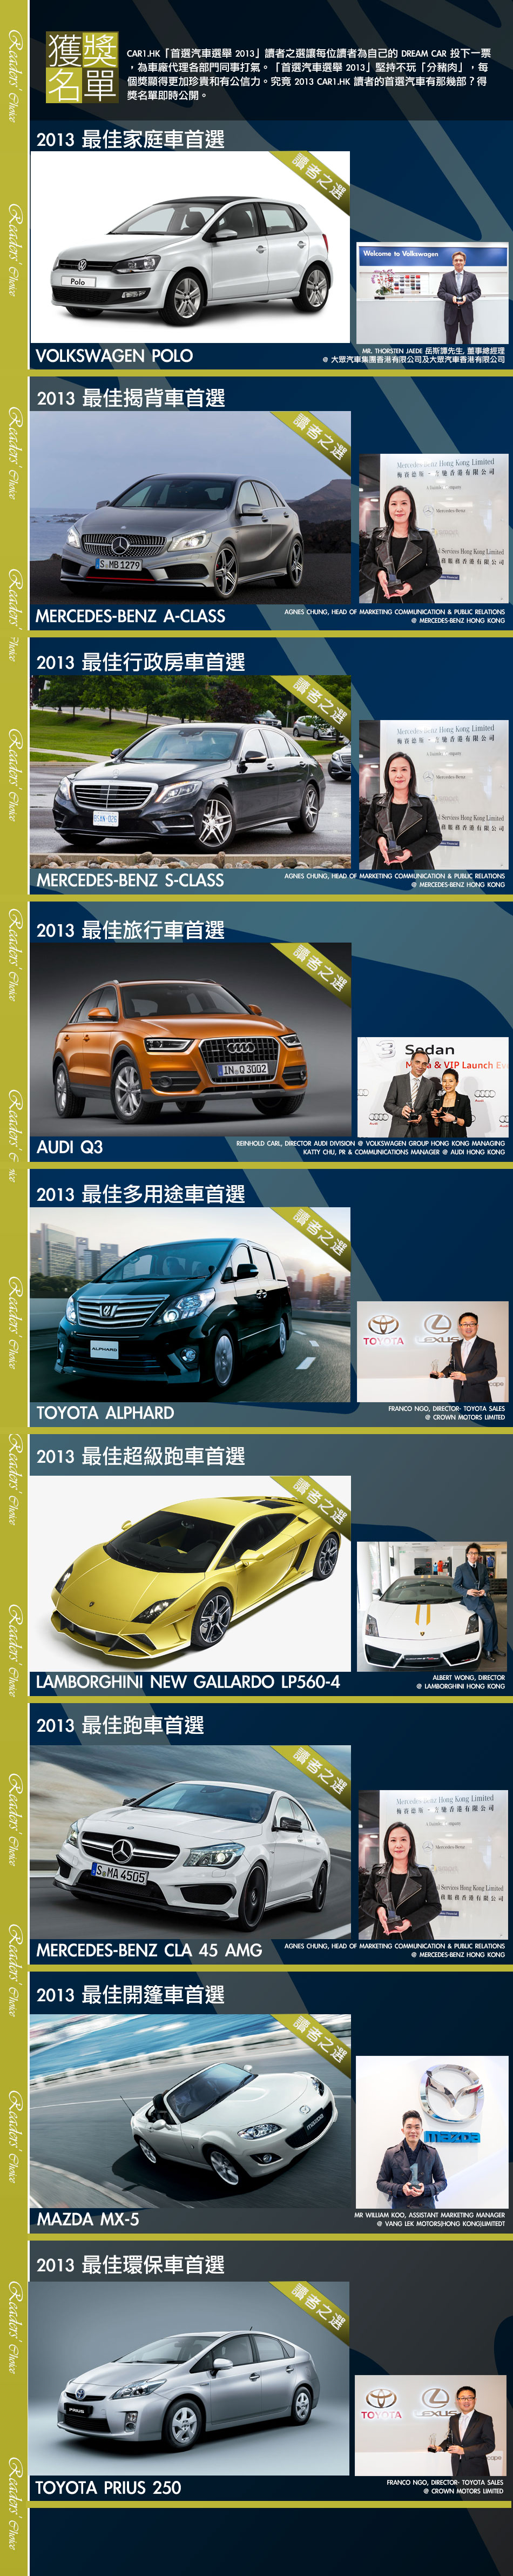 Car1.hk「首選汽車選舉 2013」「Readers’ Choice 讀者之選」